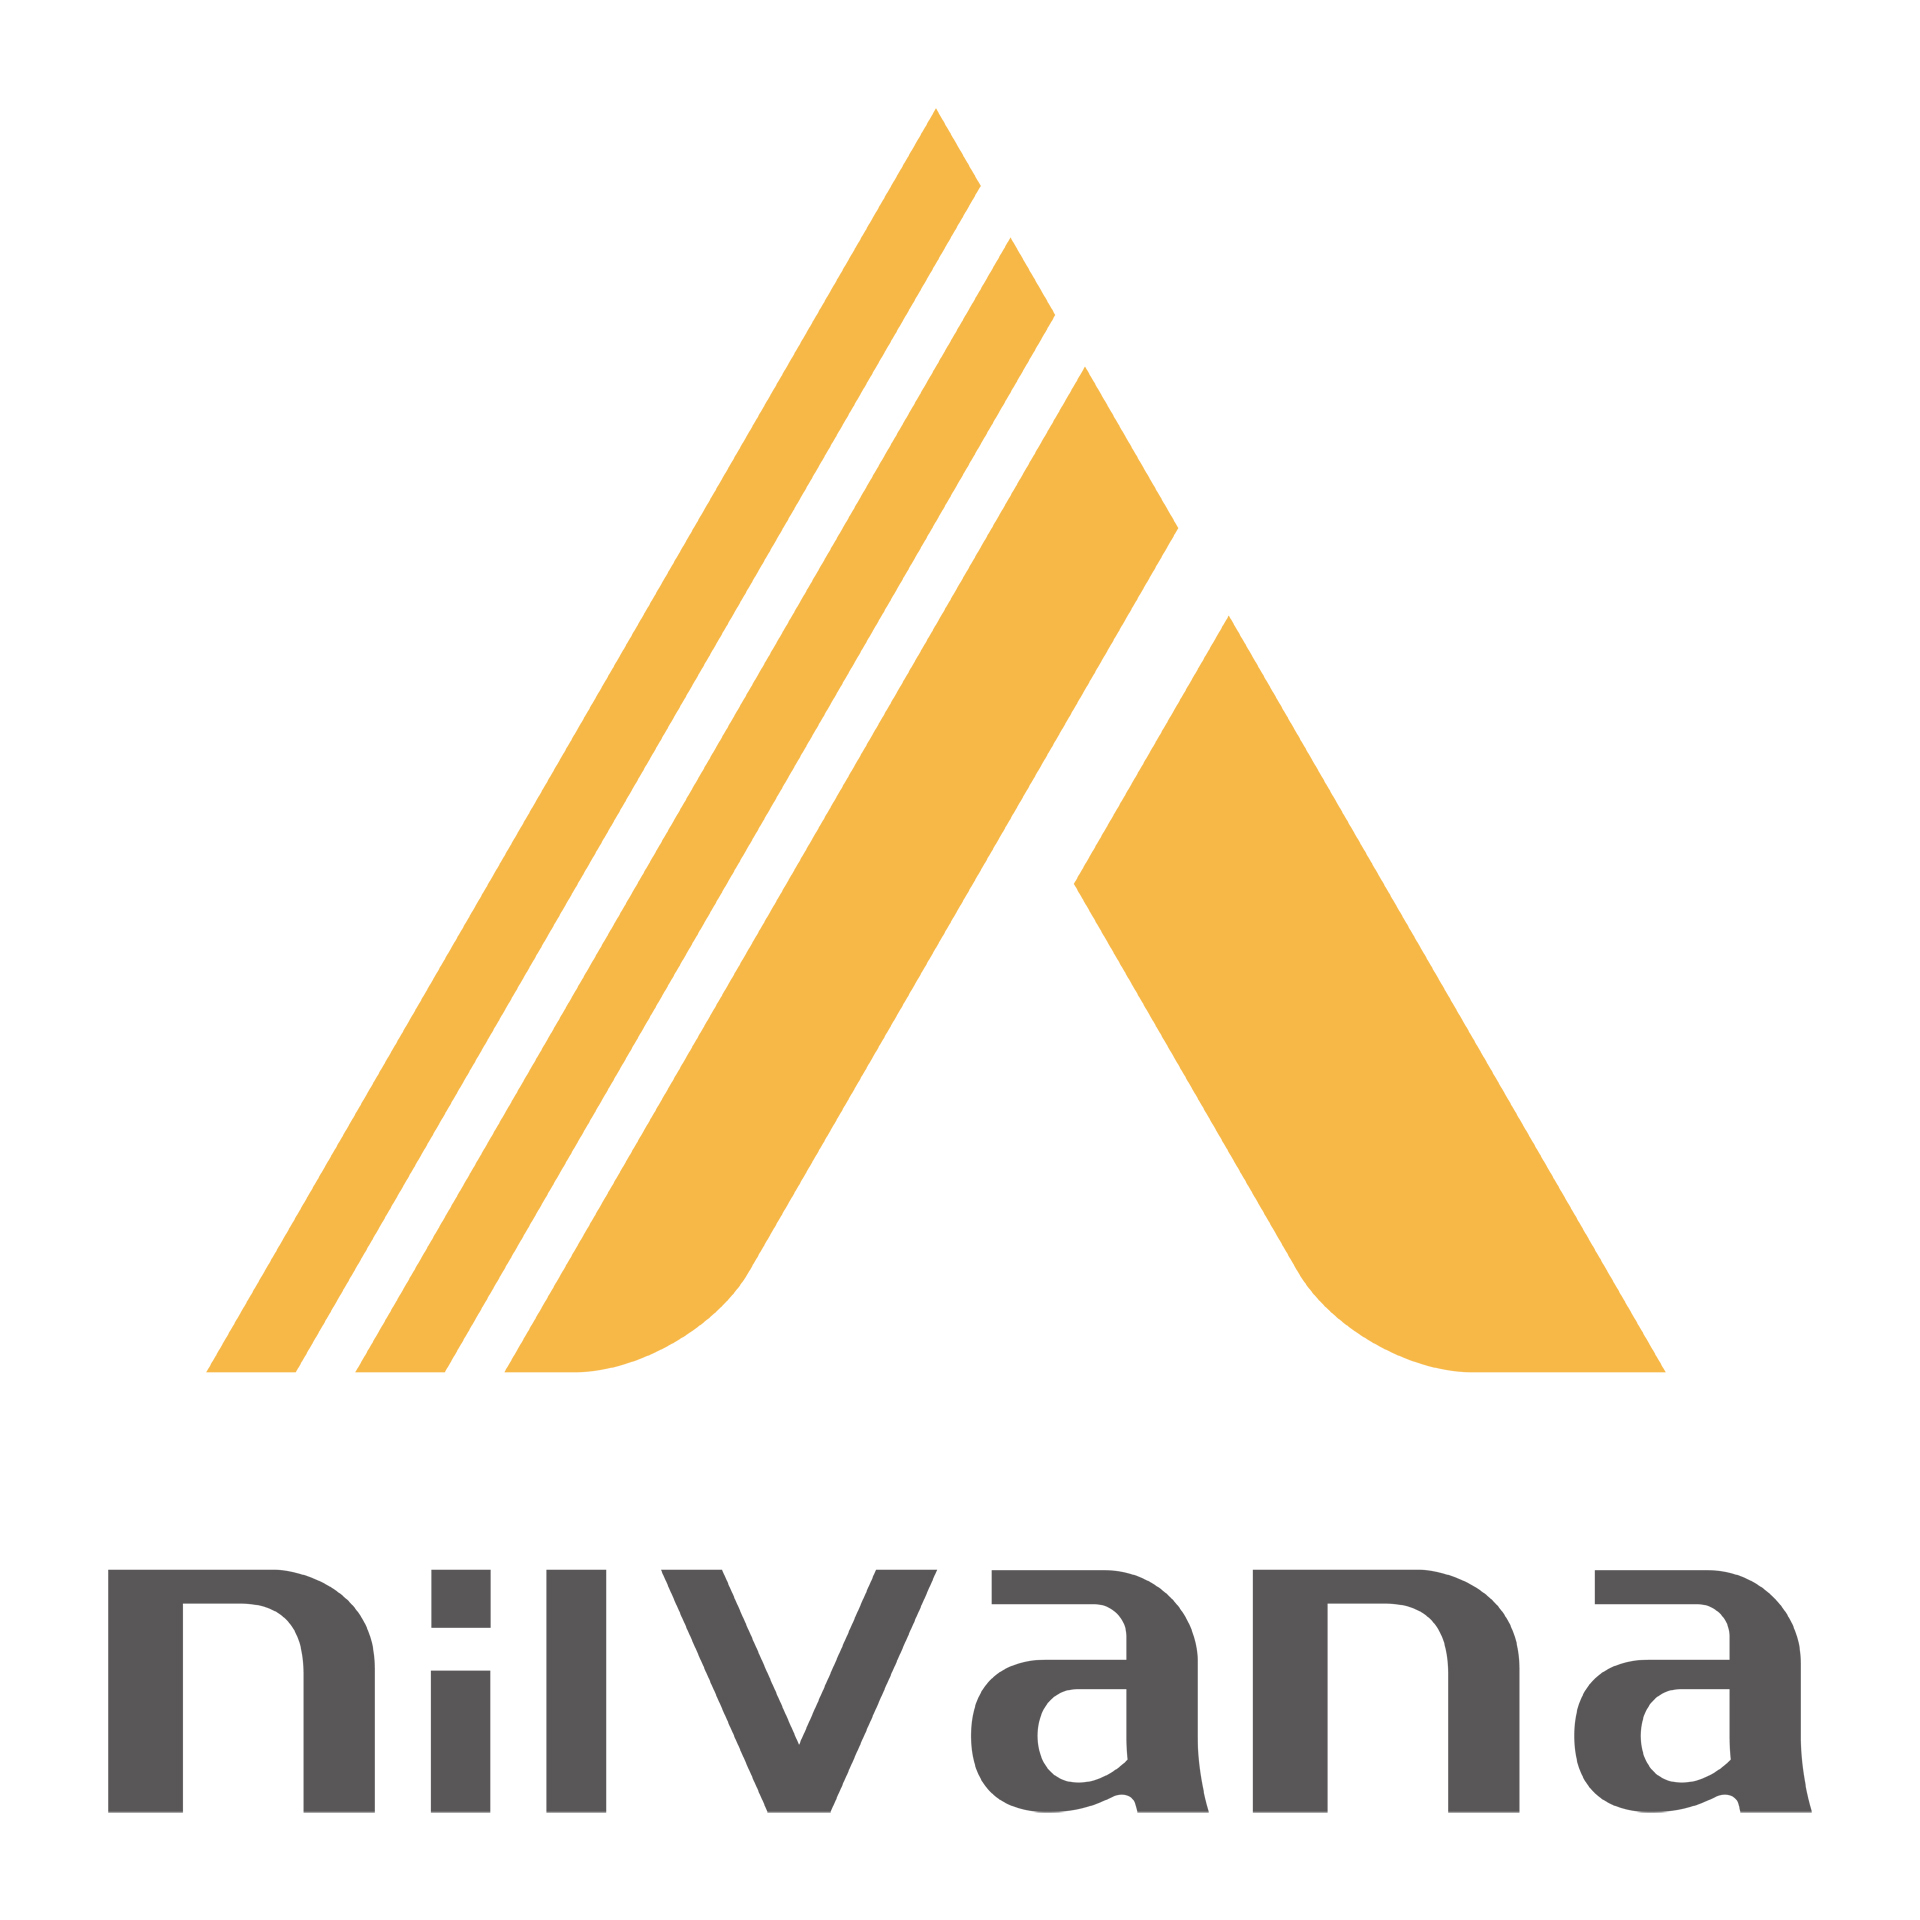 Nilvana AIコンピュータビジョンモデル連携開発・応用実装ソリューション